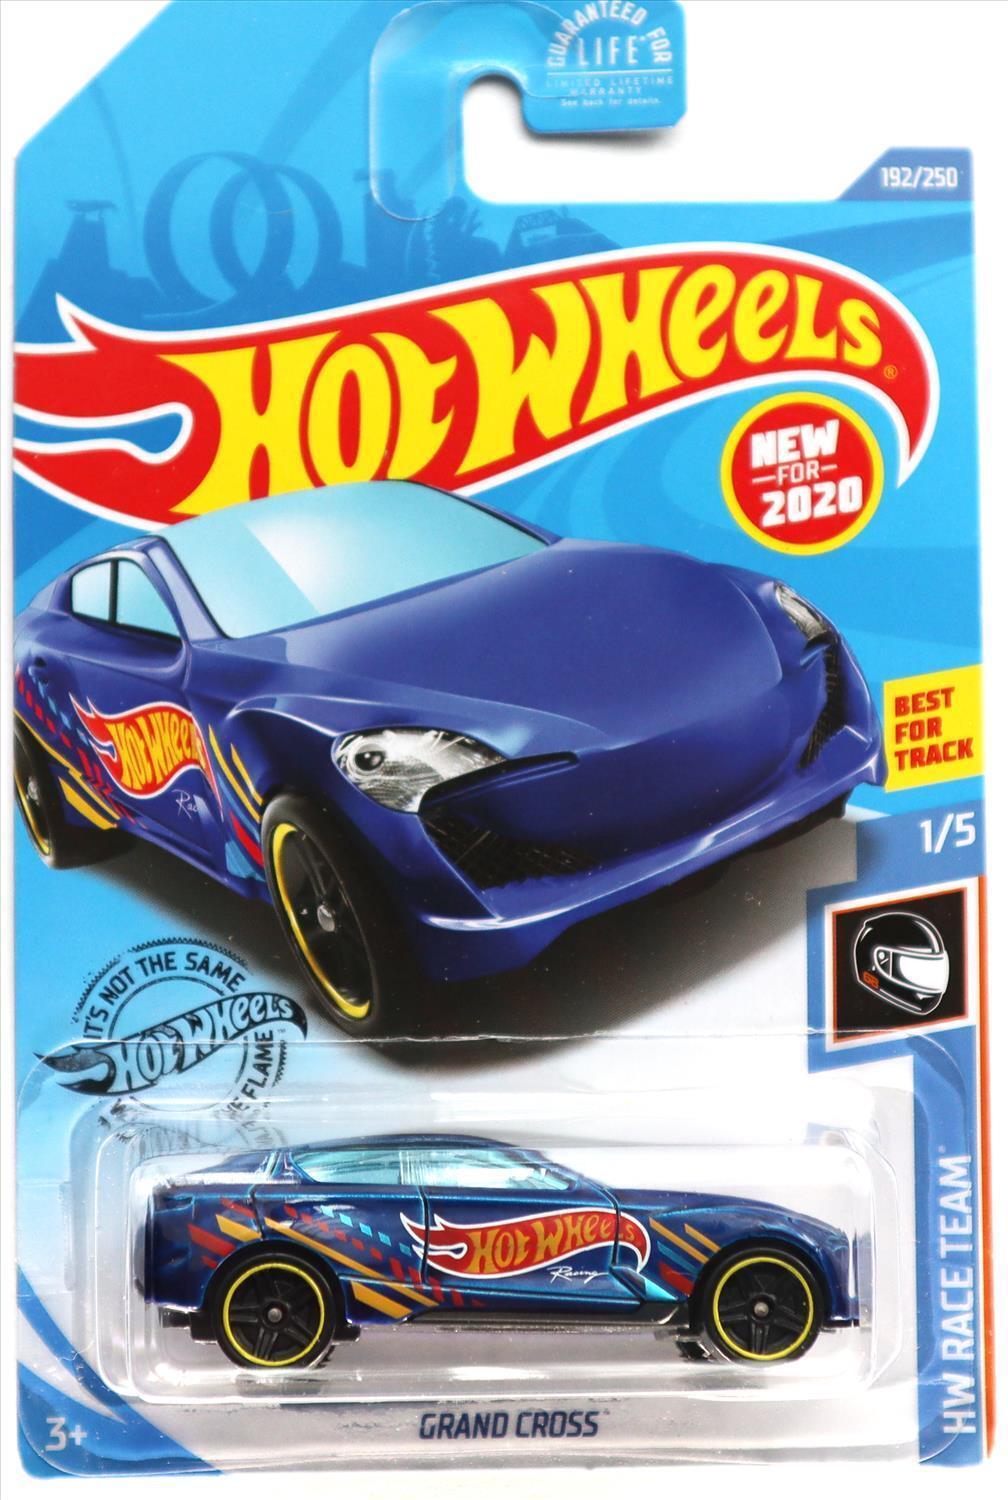 Hot Wheels 2020 - Collector # 192/250 - HW Race Team 1/5 - New Models - Grand Cross - Blue